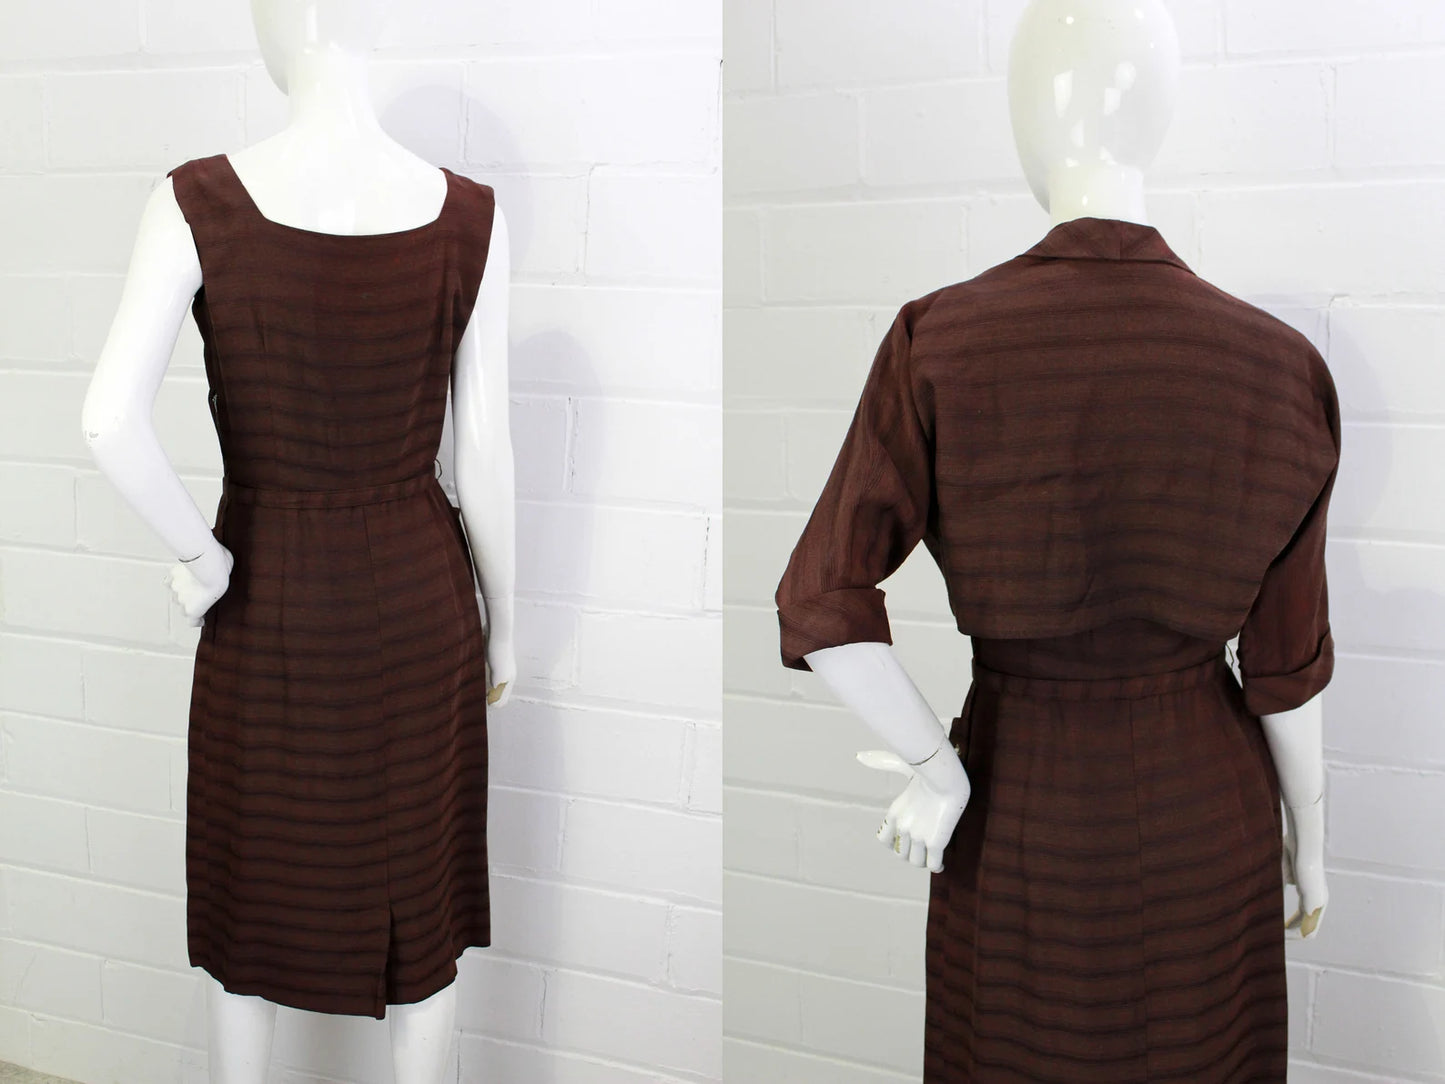 1950s Brown Dress and Jacket with Beaded Details, Short Sleeve Bolero Jacket, Vintage 50s Sheath Dress, Bust 36 in. Medium